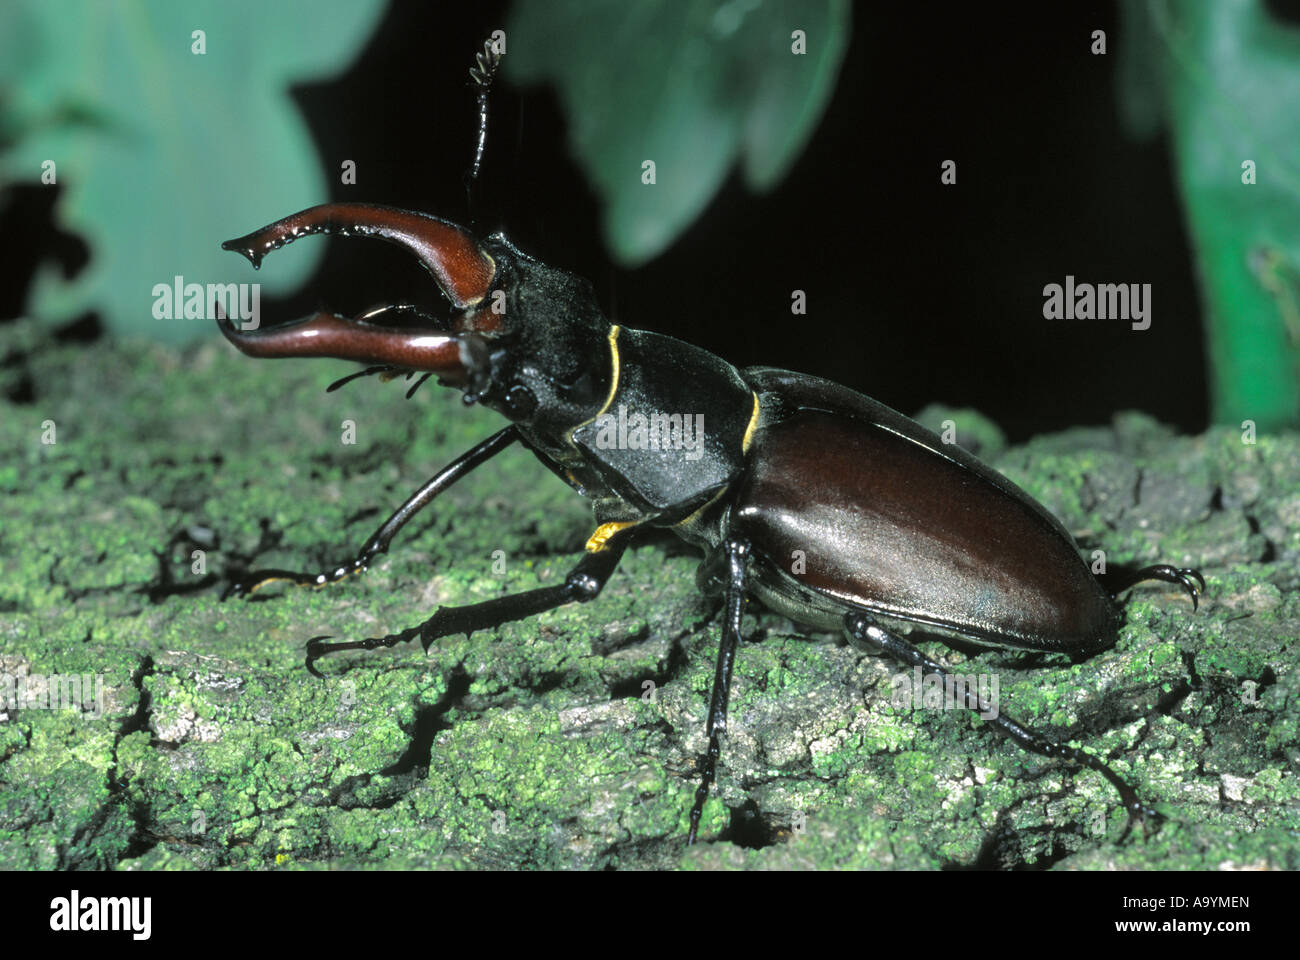 Stag beetle (Lucanus cervus) order Coleoptera Stock Photo